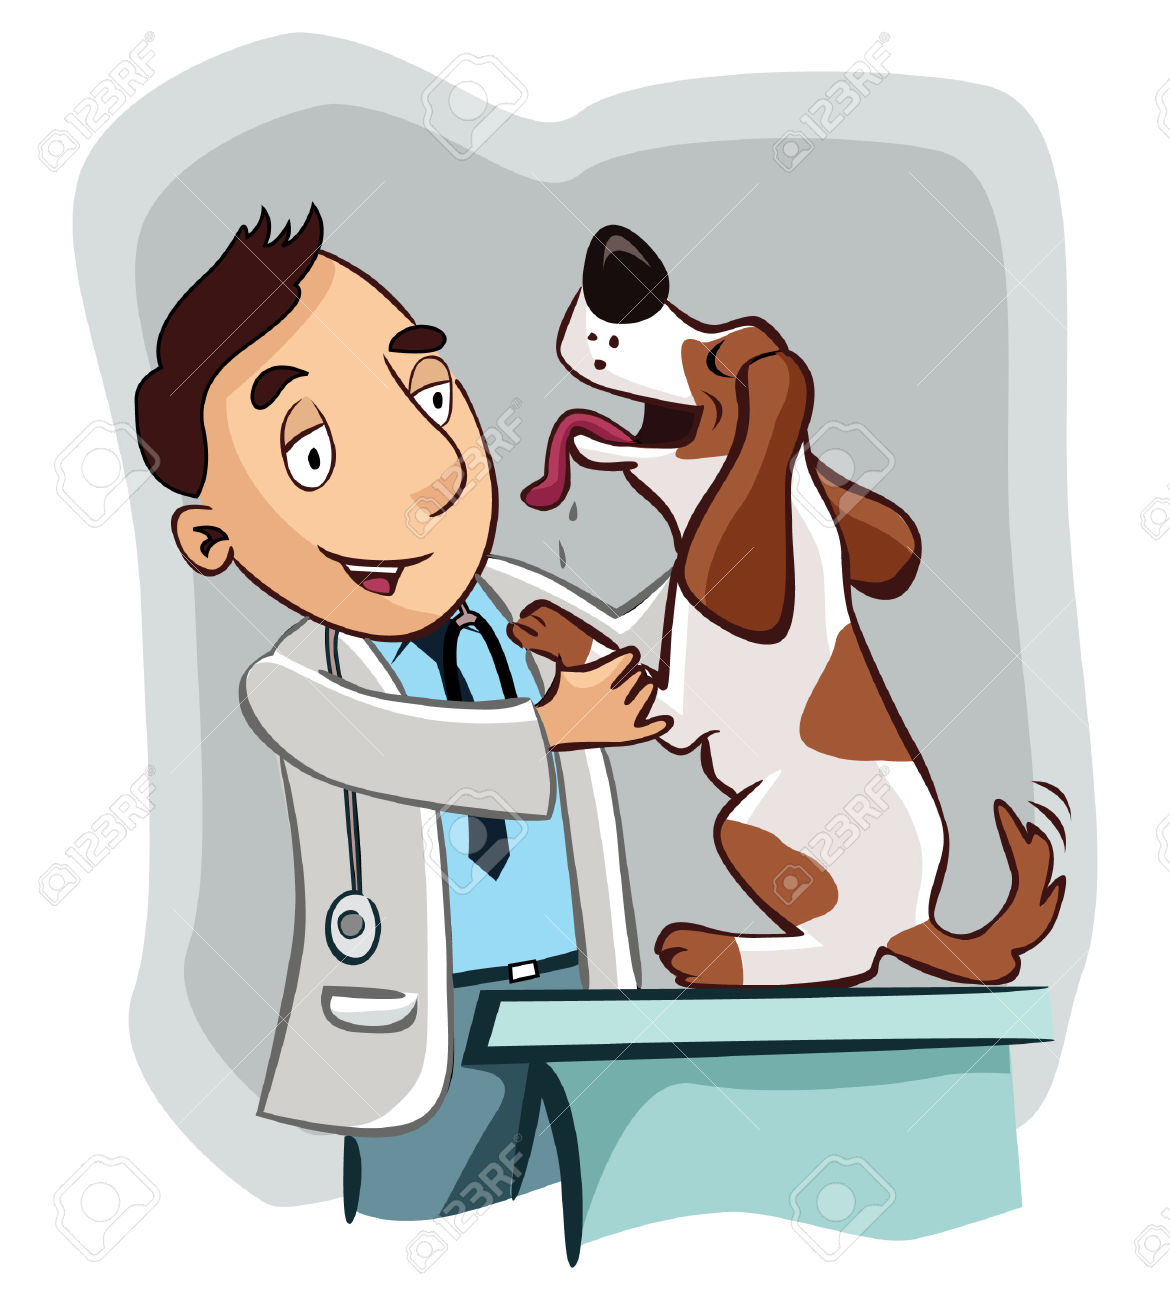 veterinarian: Animal doctor